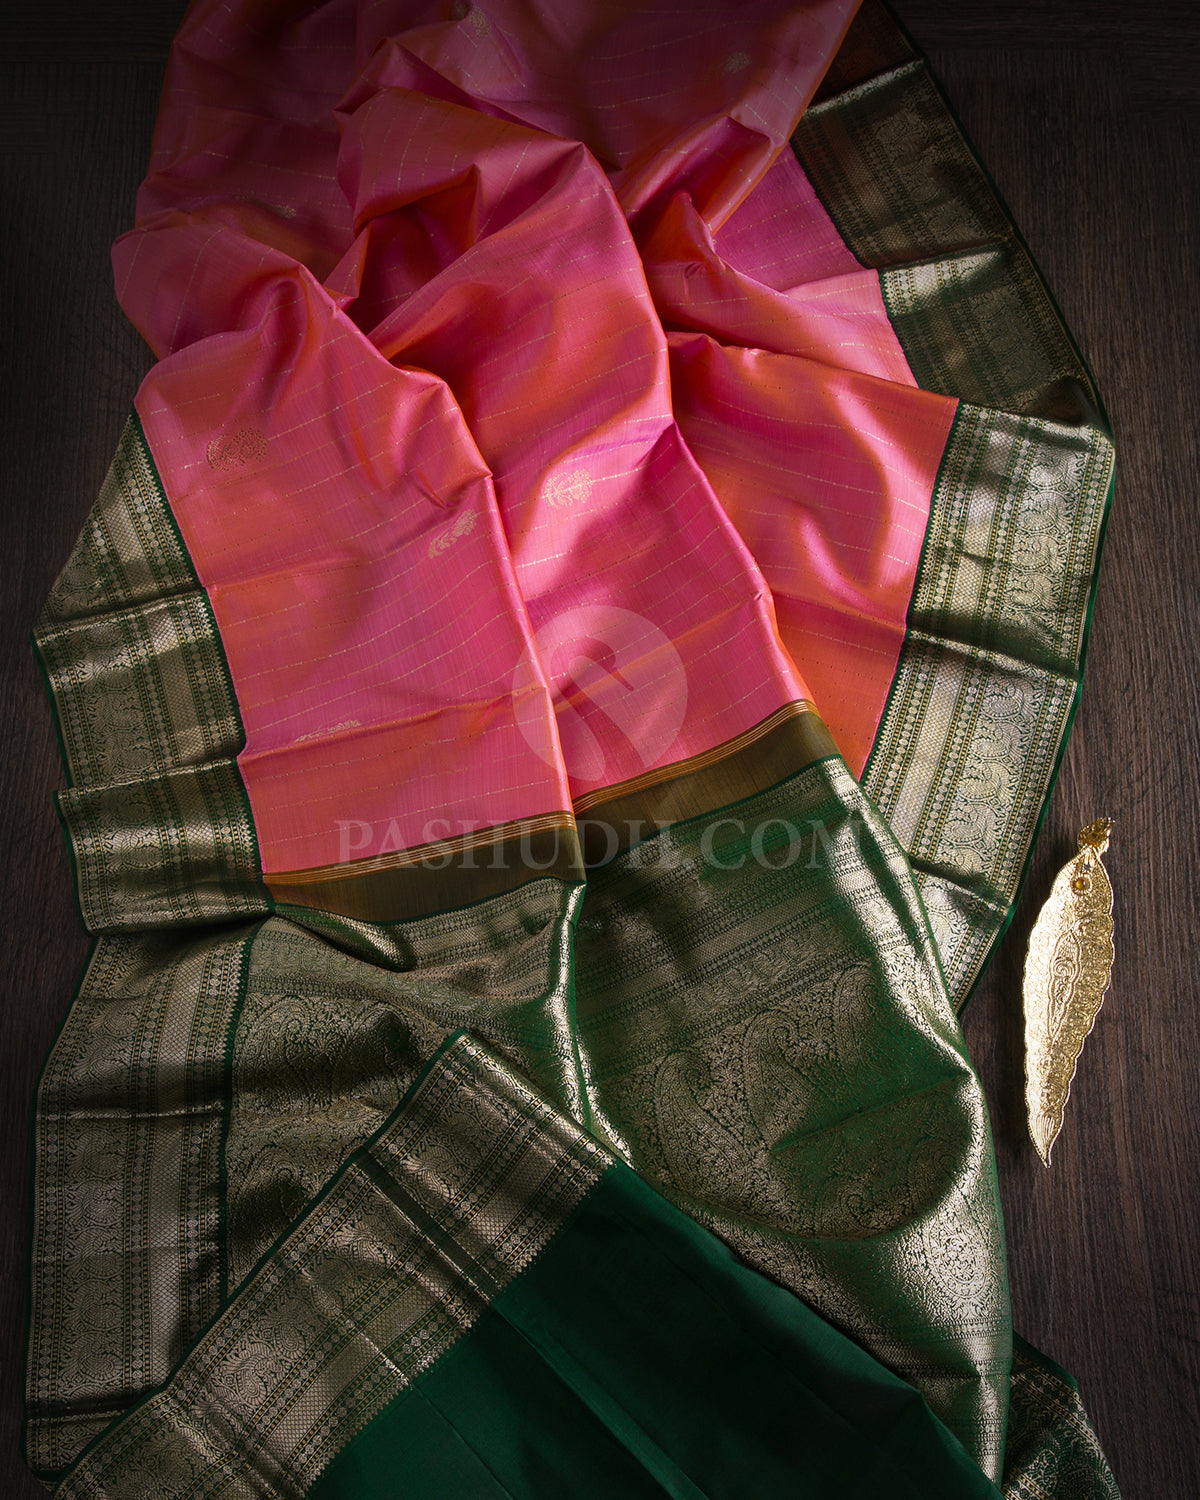 Dual Shaded Pink & Deep Green Border Kanjivaram Silk Saree - S981(A) - View 1